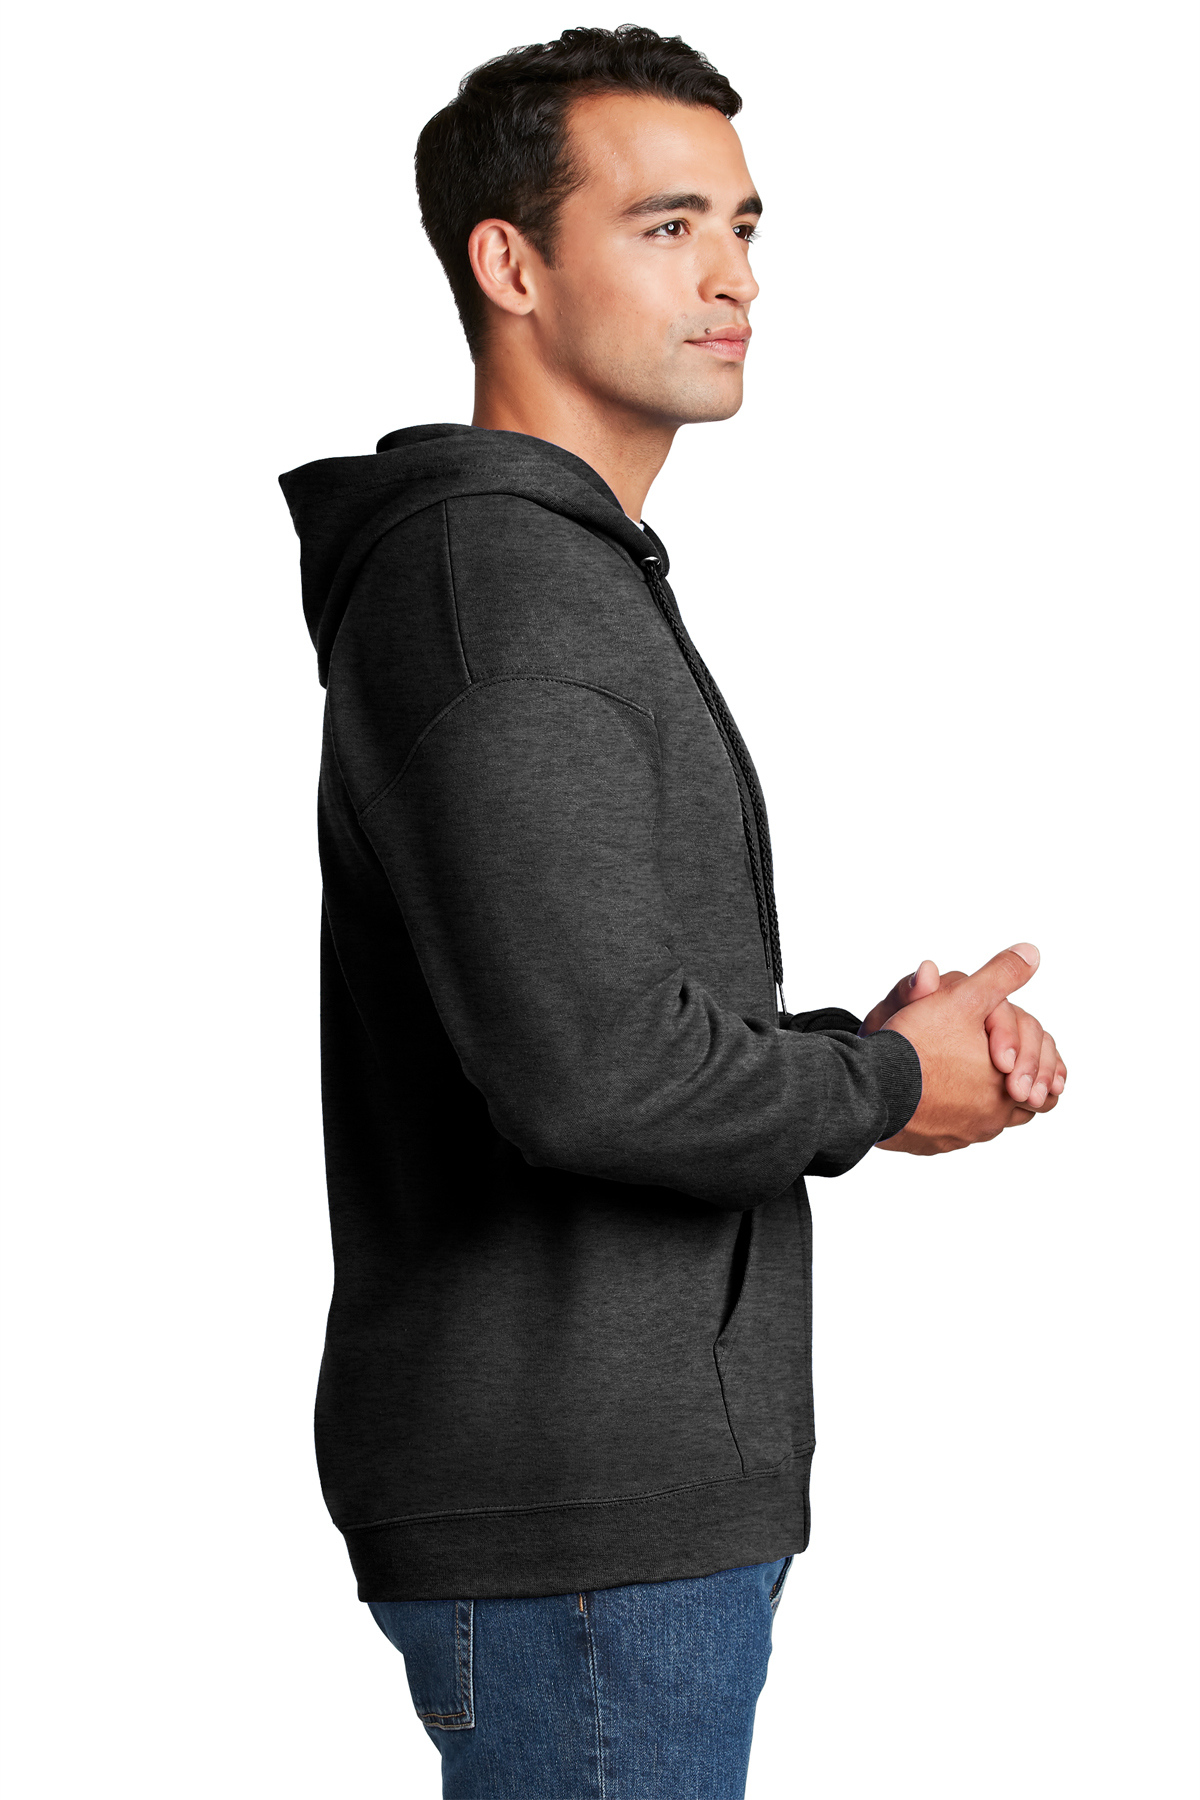 Hanes Ultimate Cotton - Full-Zip Hooded Sweatshirt | Product | SanMar